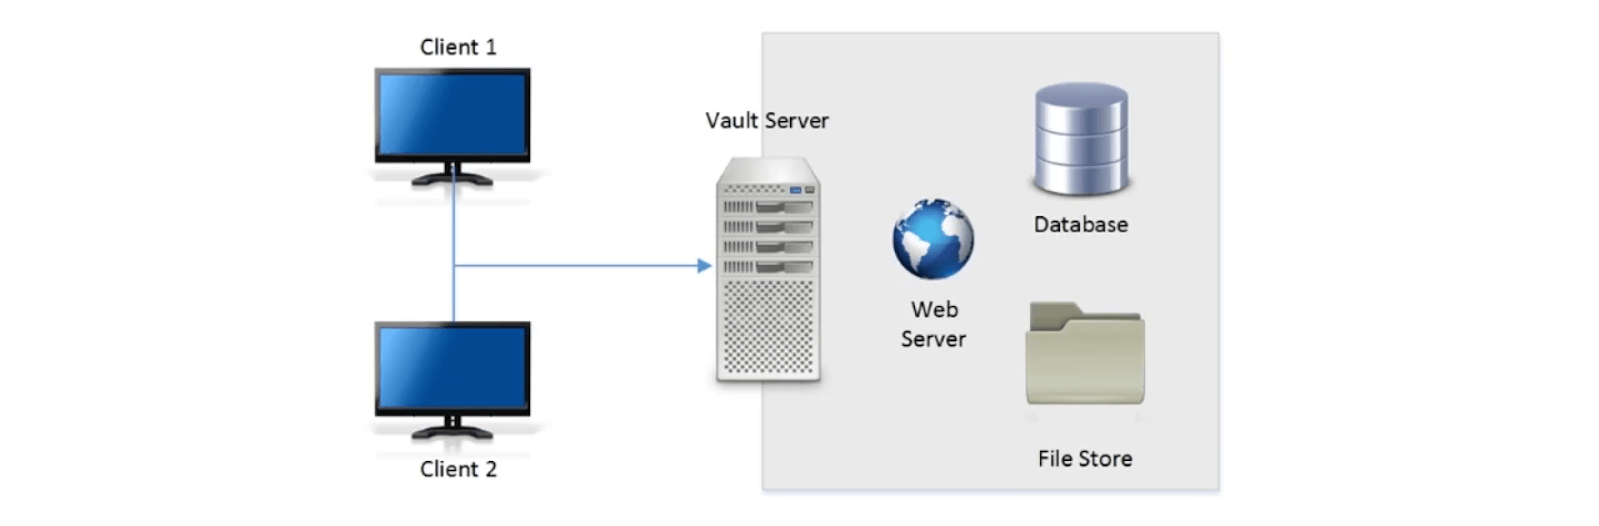 Overview of Server-Client Interaction in Autodesk Vault